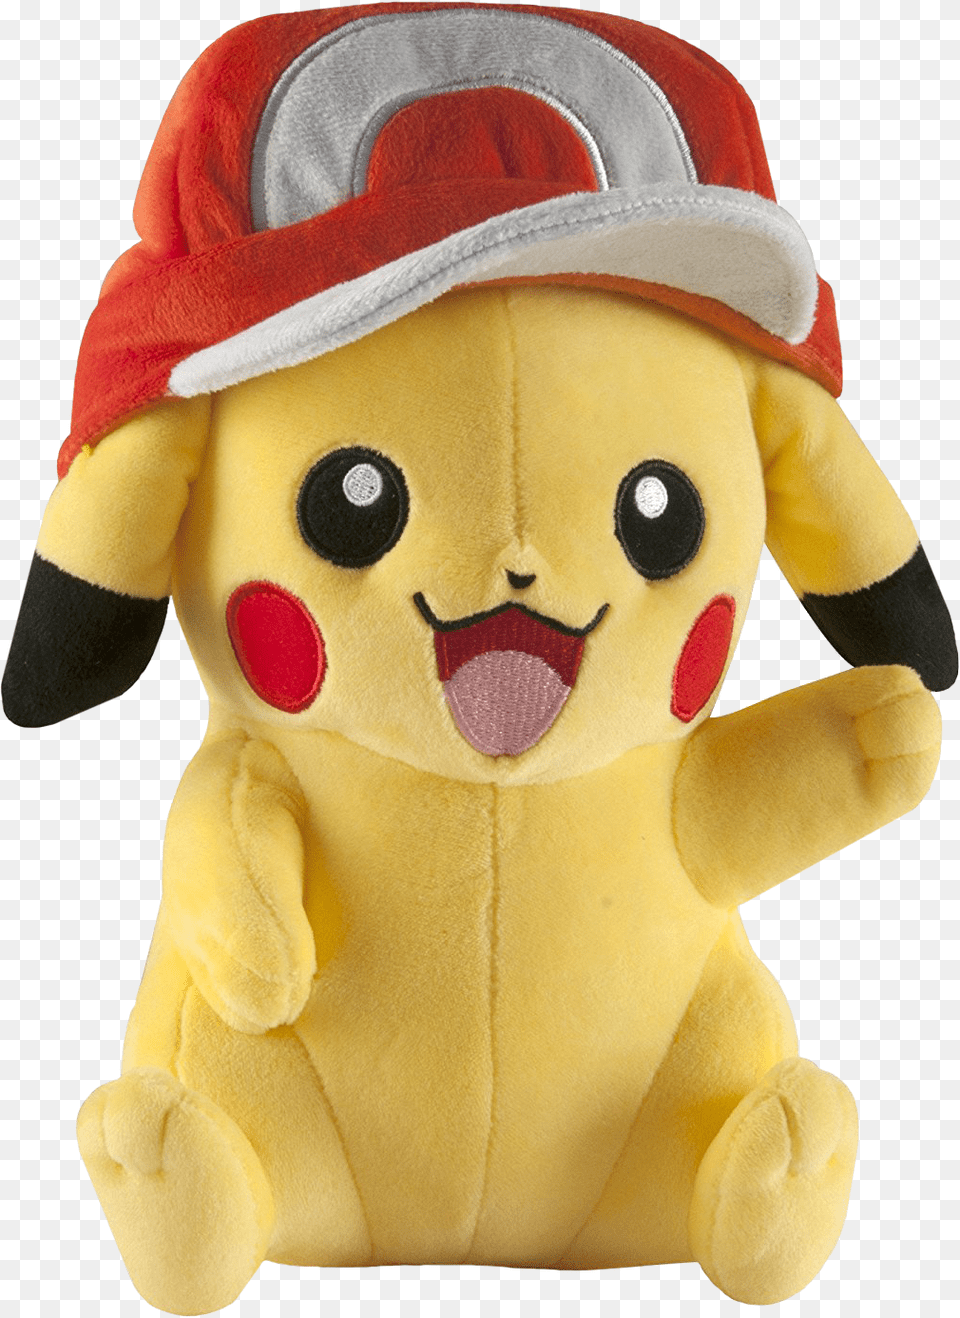 Pokmon Large Pikachu With Ash39s Hat Plush Pikachu Plush, Toy Png Image